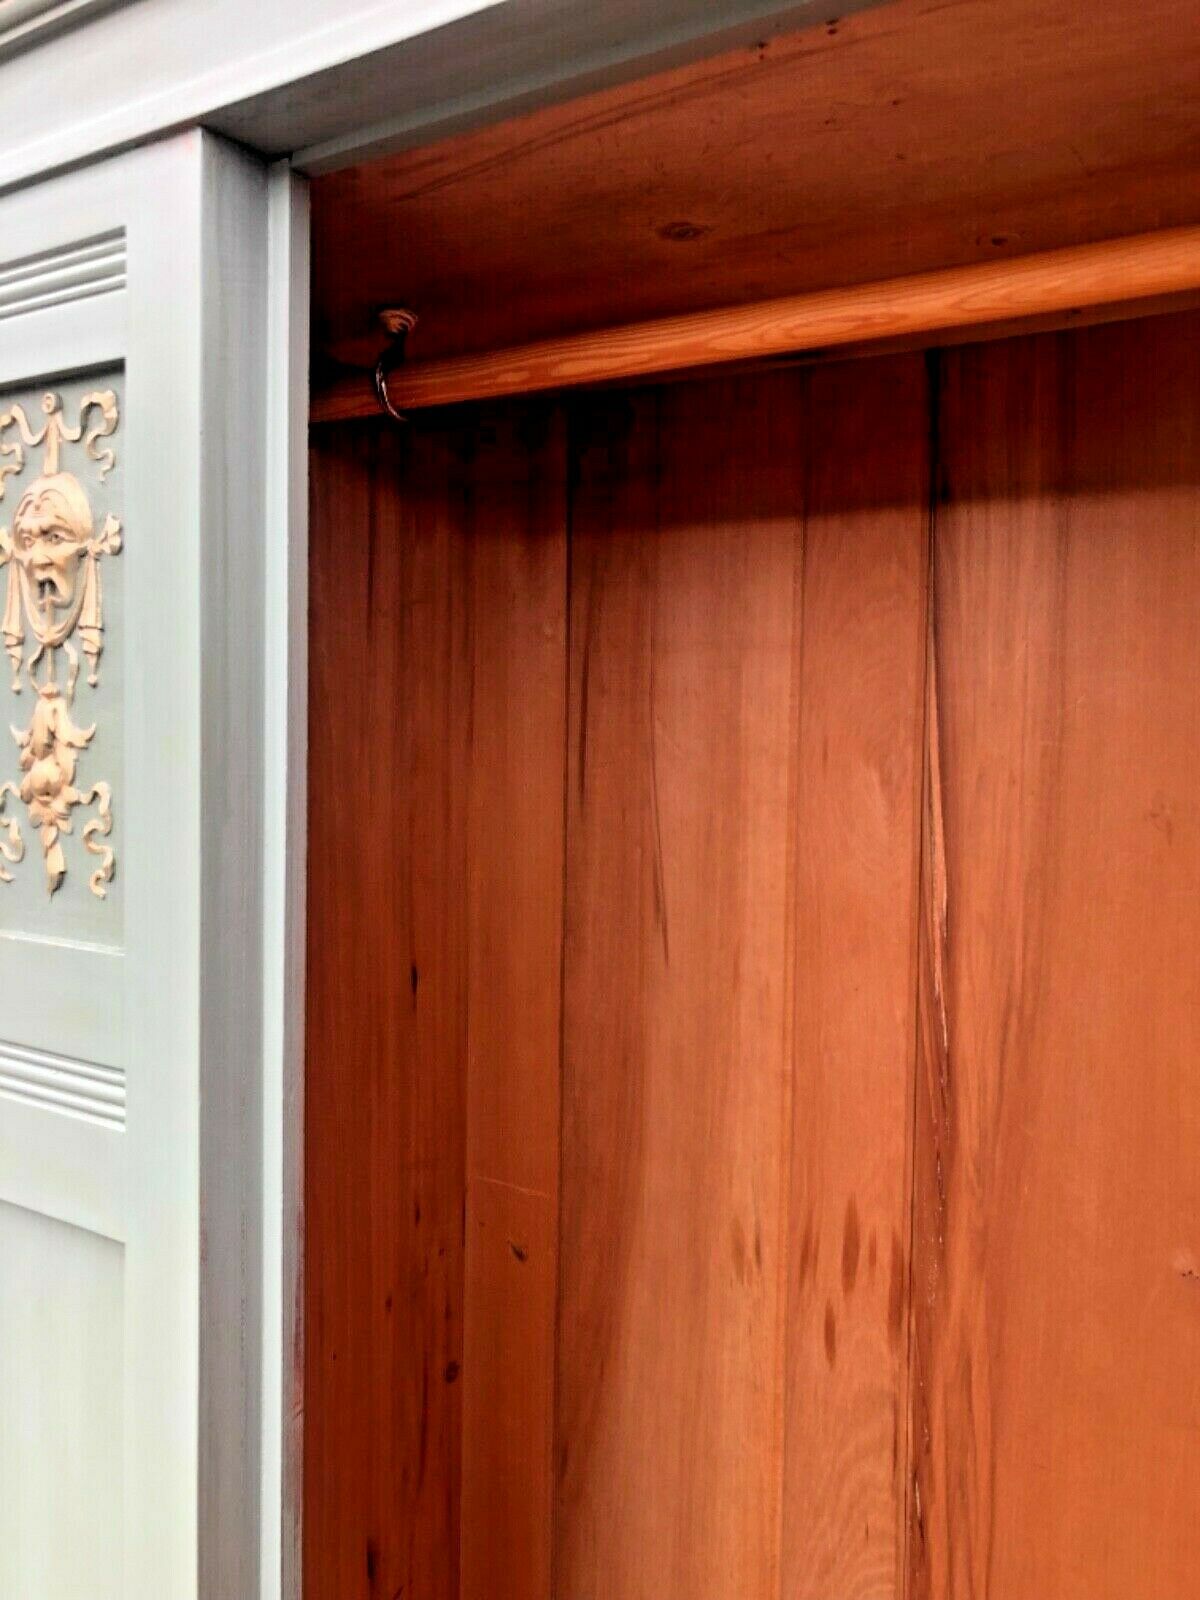 Edwardian Refinished Satin Walnut Wardrobe With Mirror Door ( SOLD )